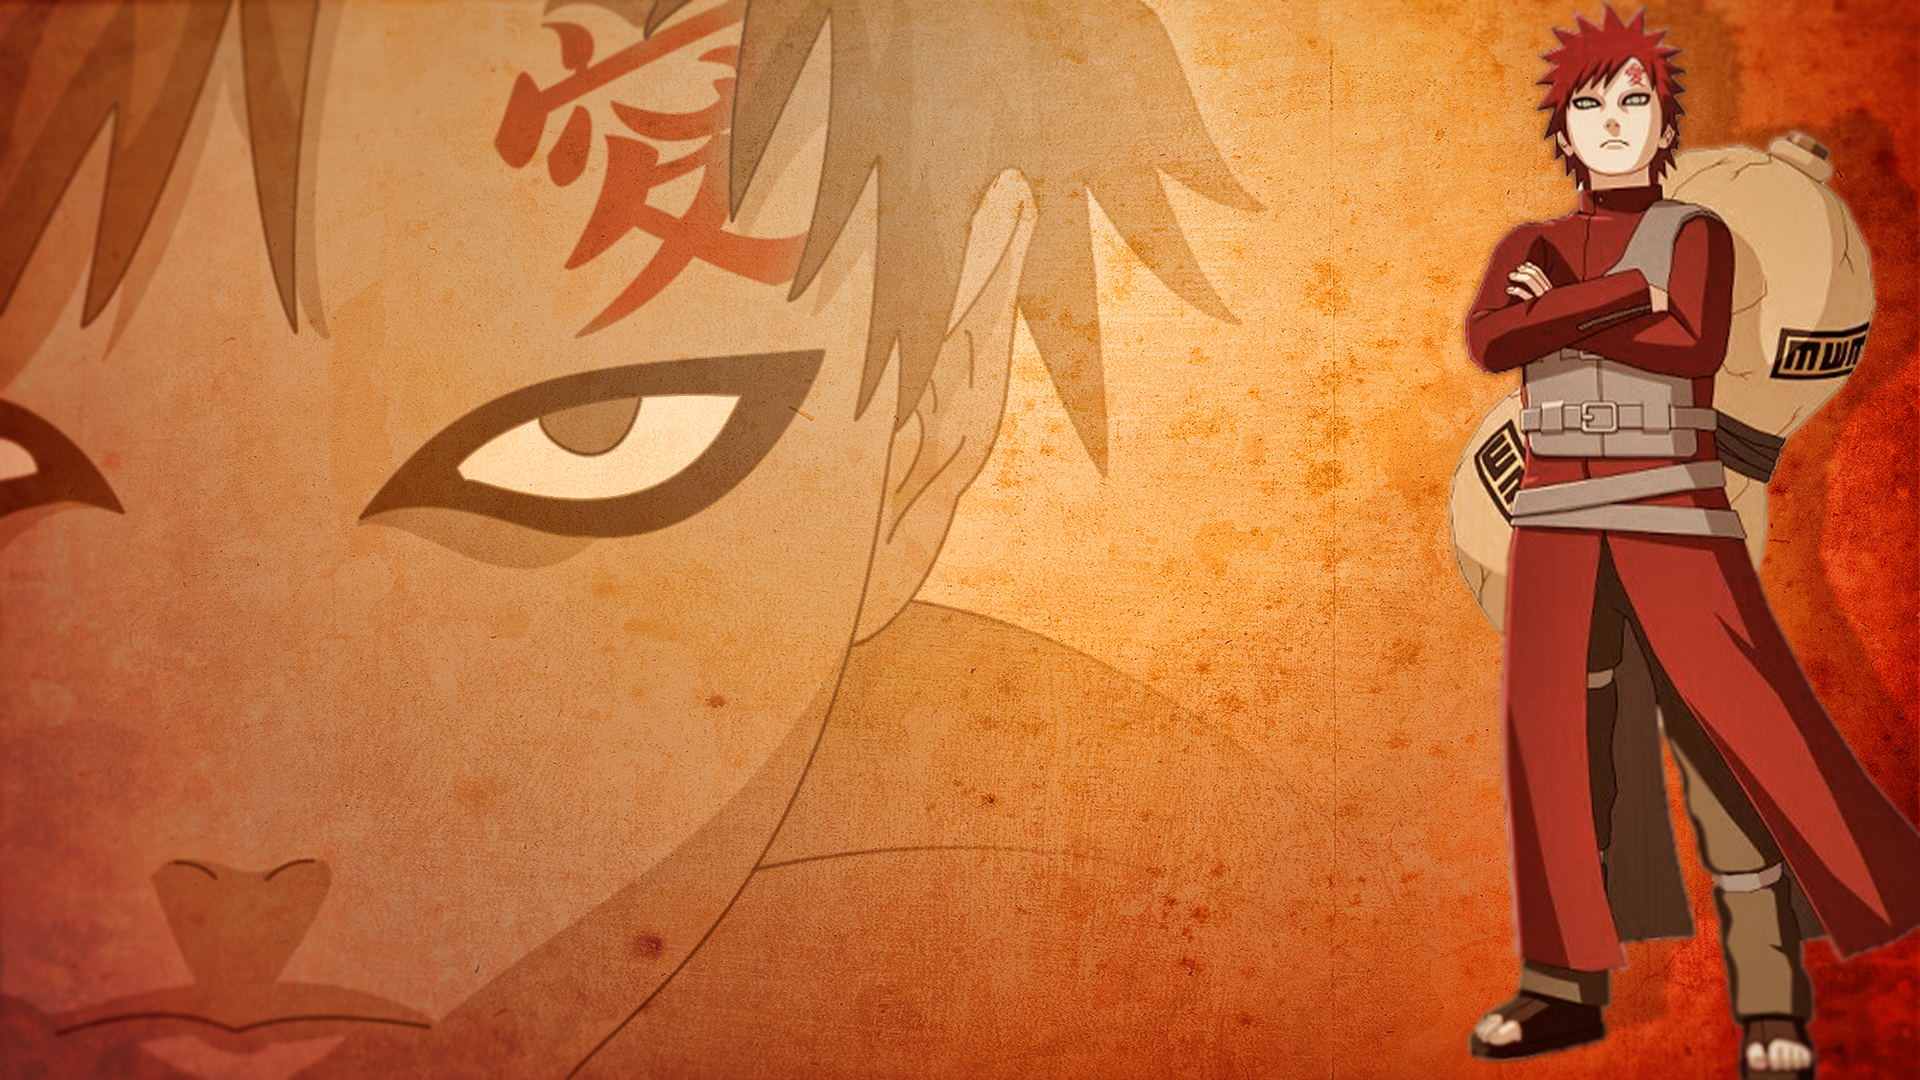 Kazekage Gaara Naruto Laptop Background Wallpaper Anime Wallpaper Better